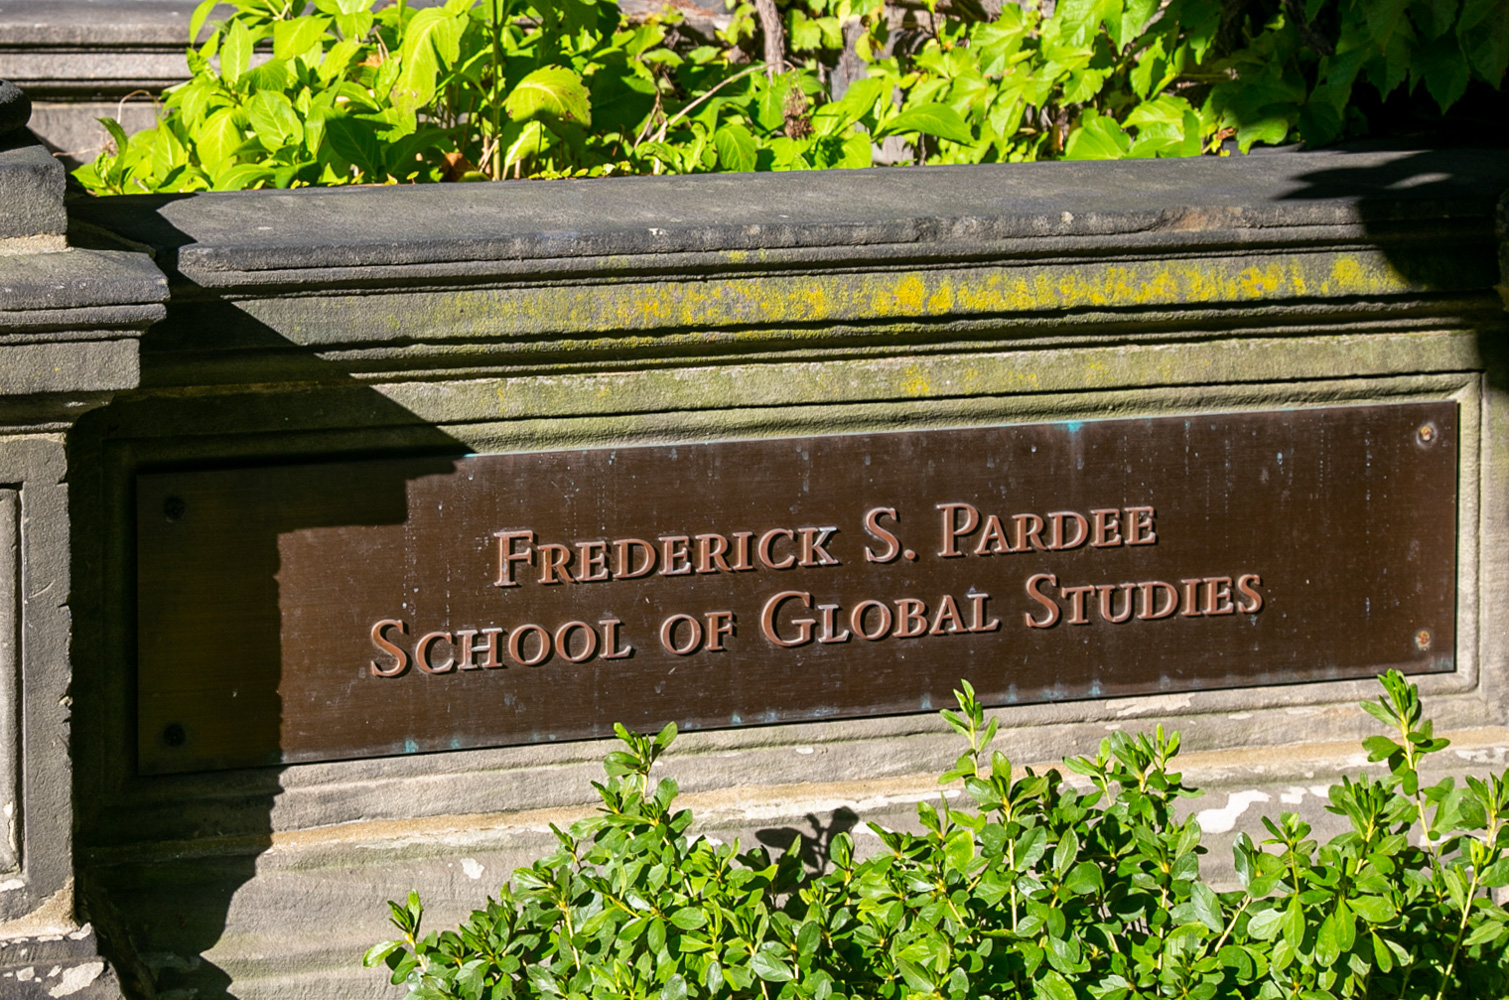 “Frederick S. Pardee全球研究学院”的牌匾